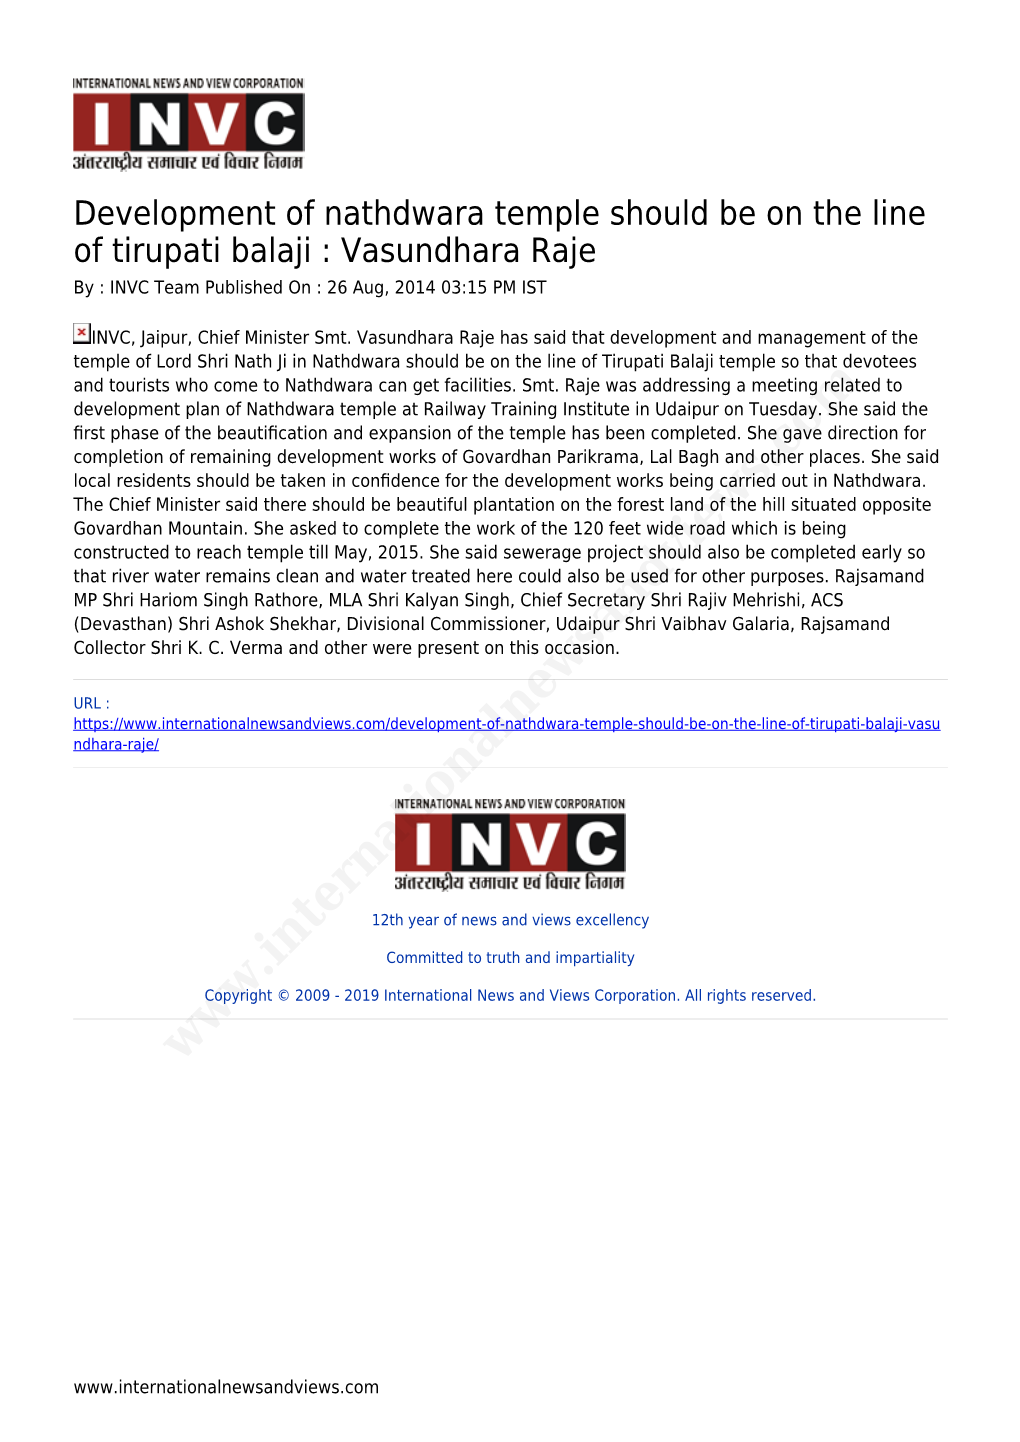 Vasundhara Raje by : INVC Team Published on : 26 Aug, 2014 03:15 PM IST